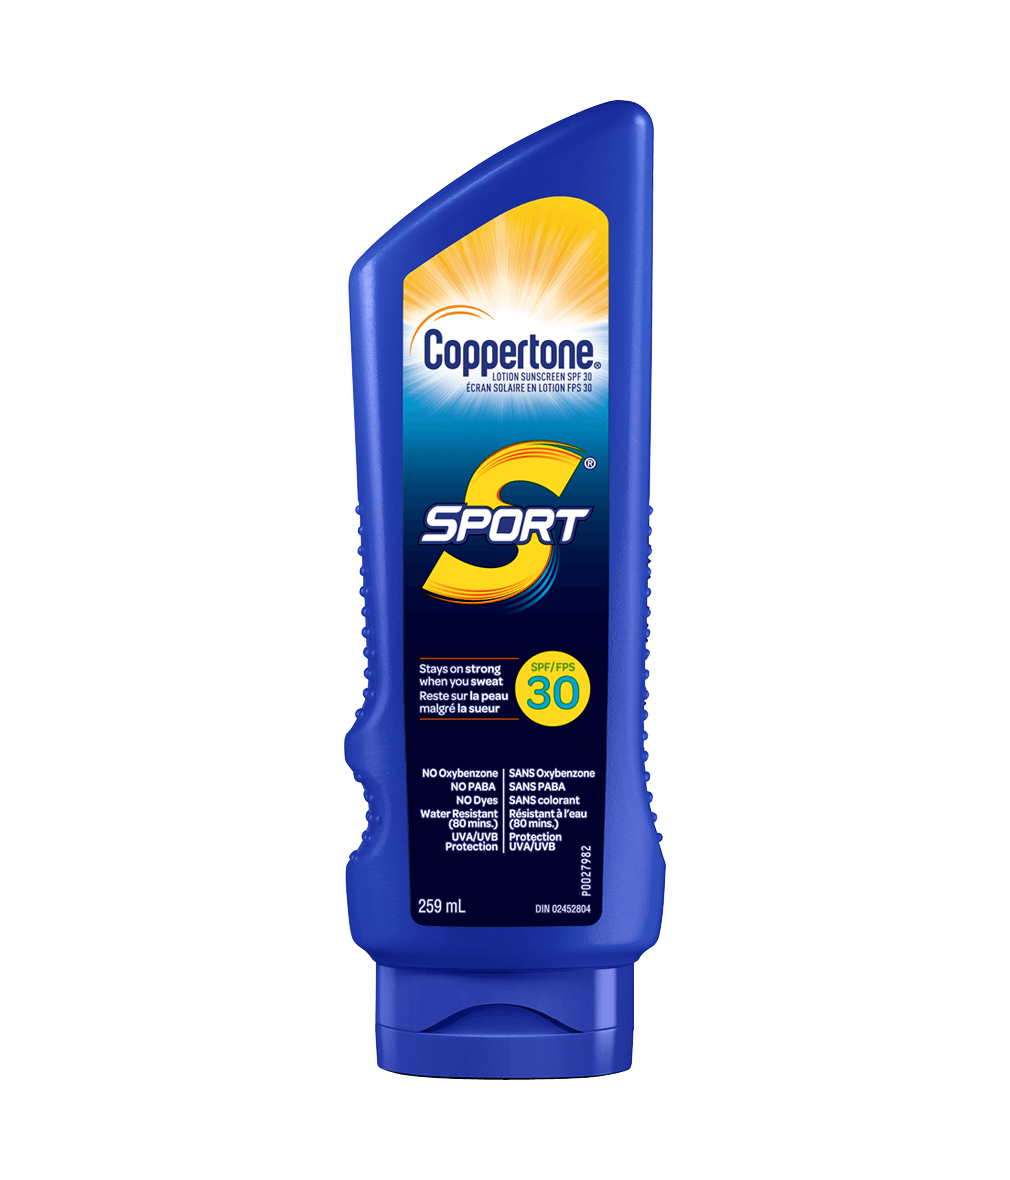 Coppertone SPORT® Sunscreen Lotion SPF30